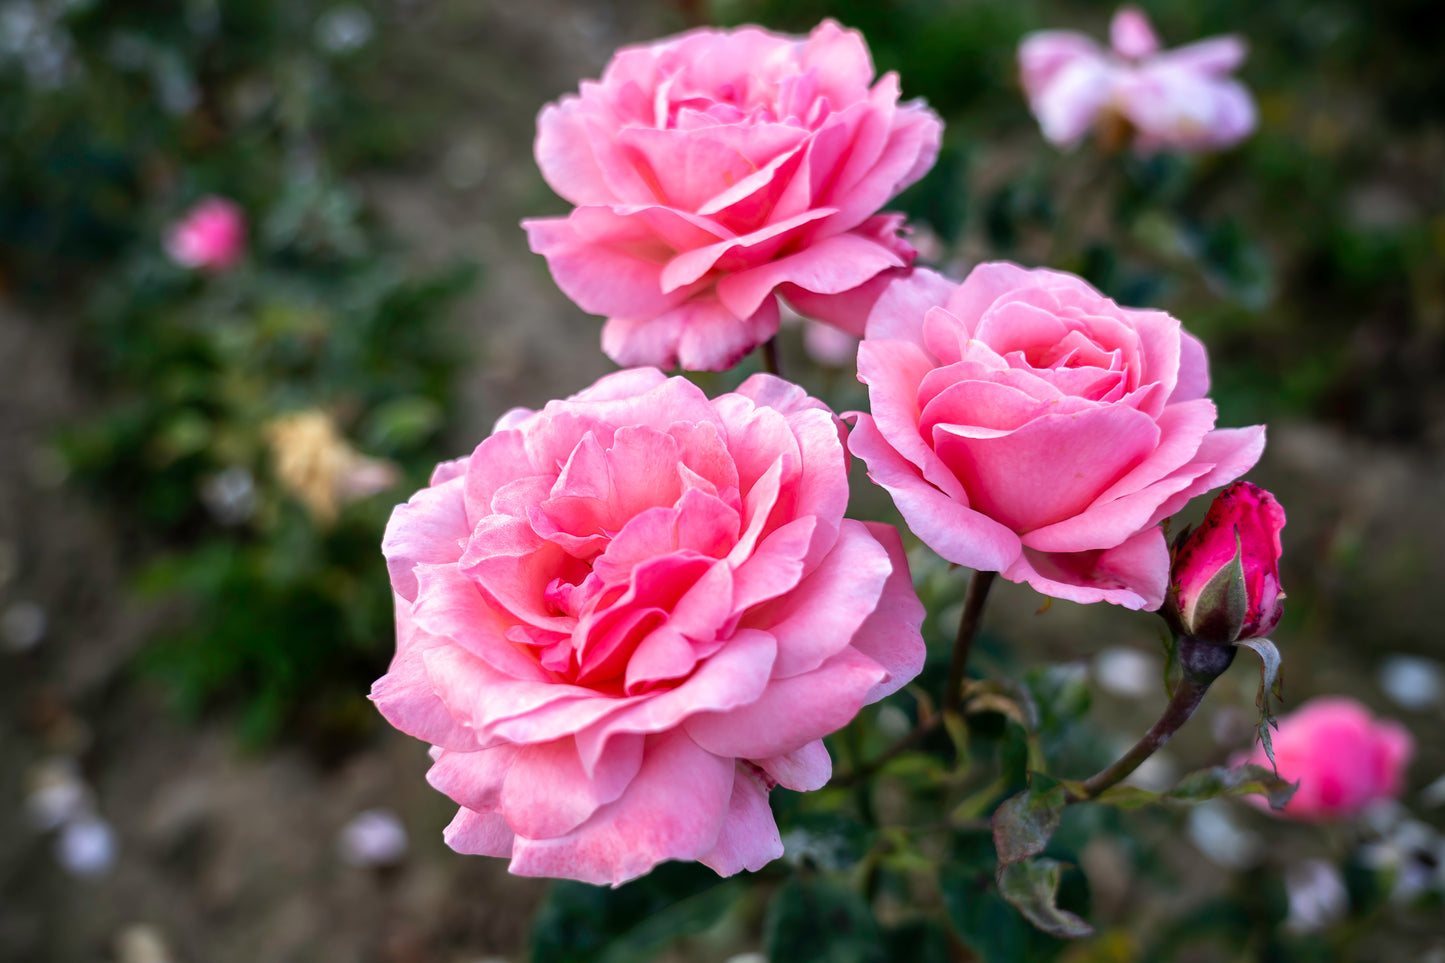 Rose Plants - Floribunda - 'Queen Elizabeth' - 1 x Full Plant in 5L Pot